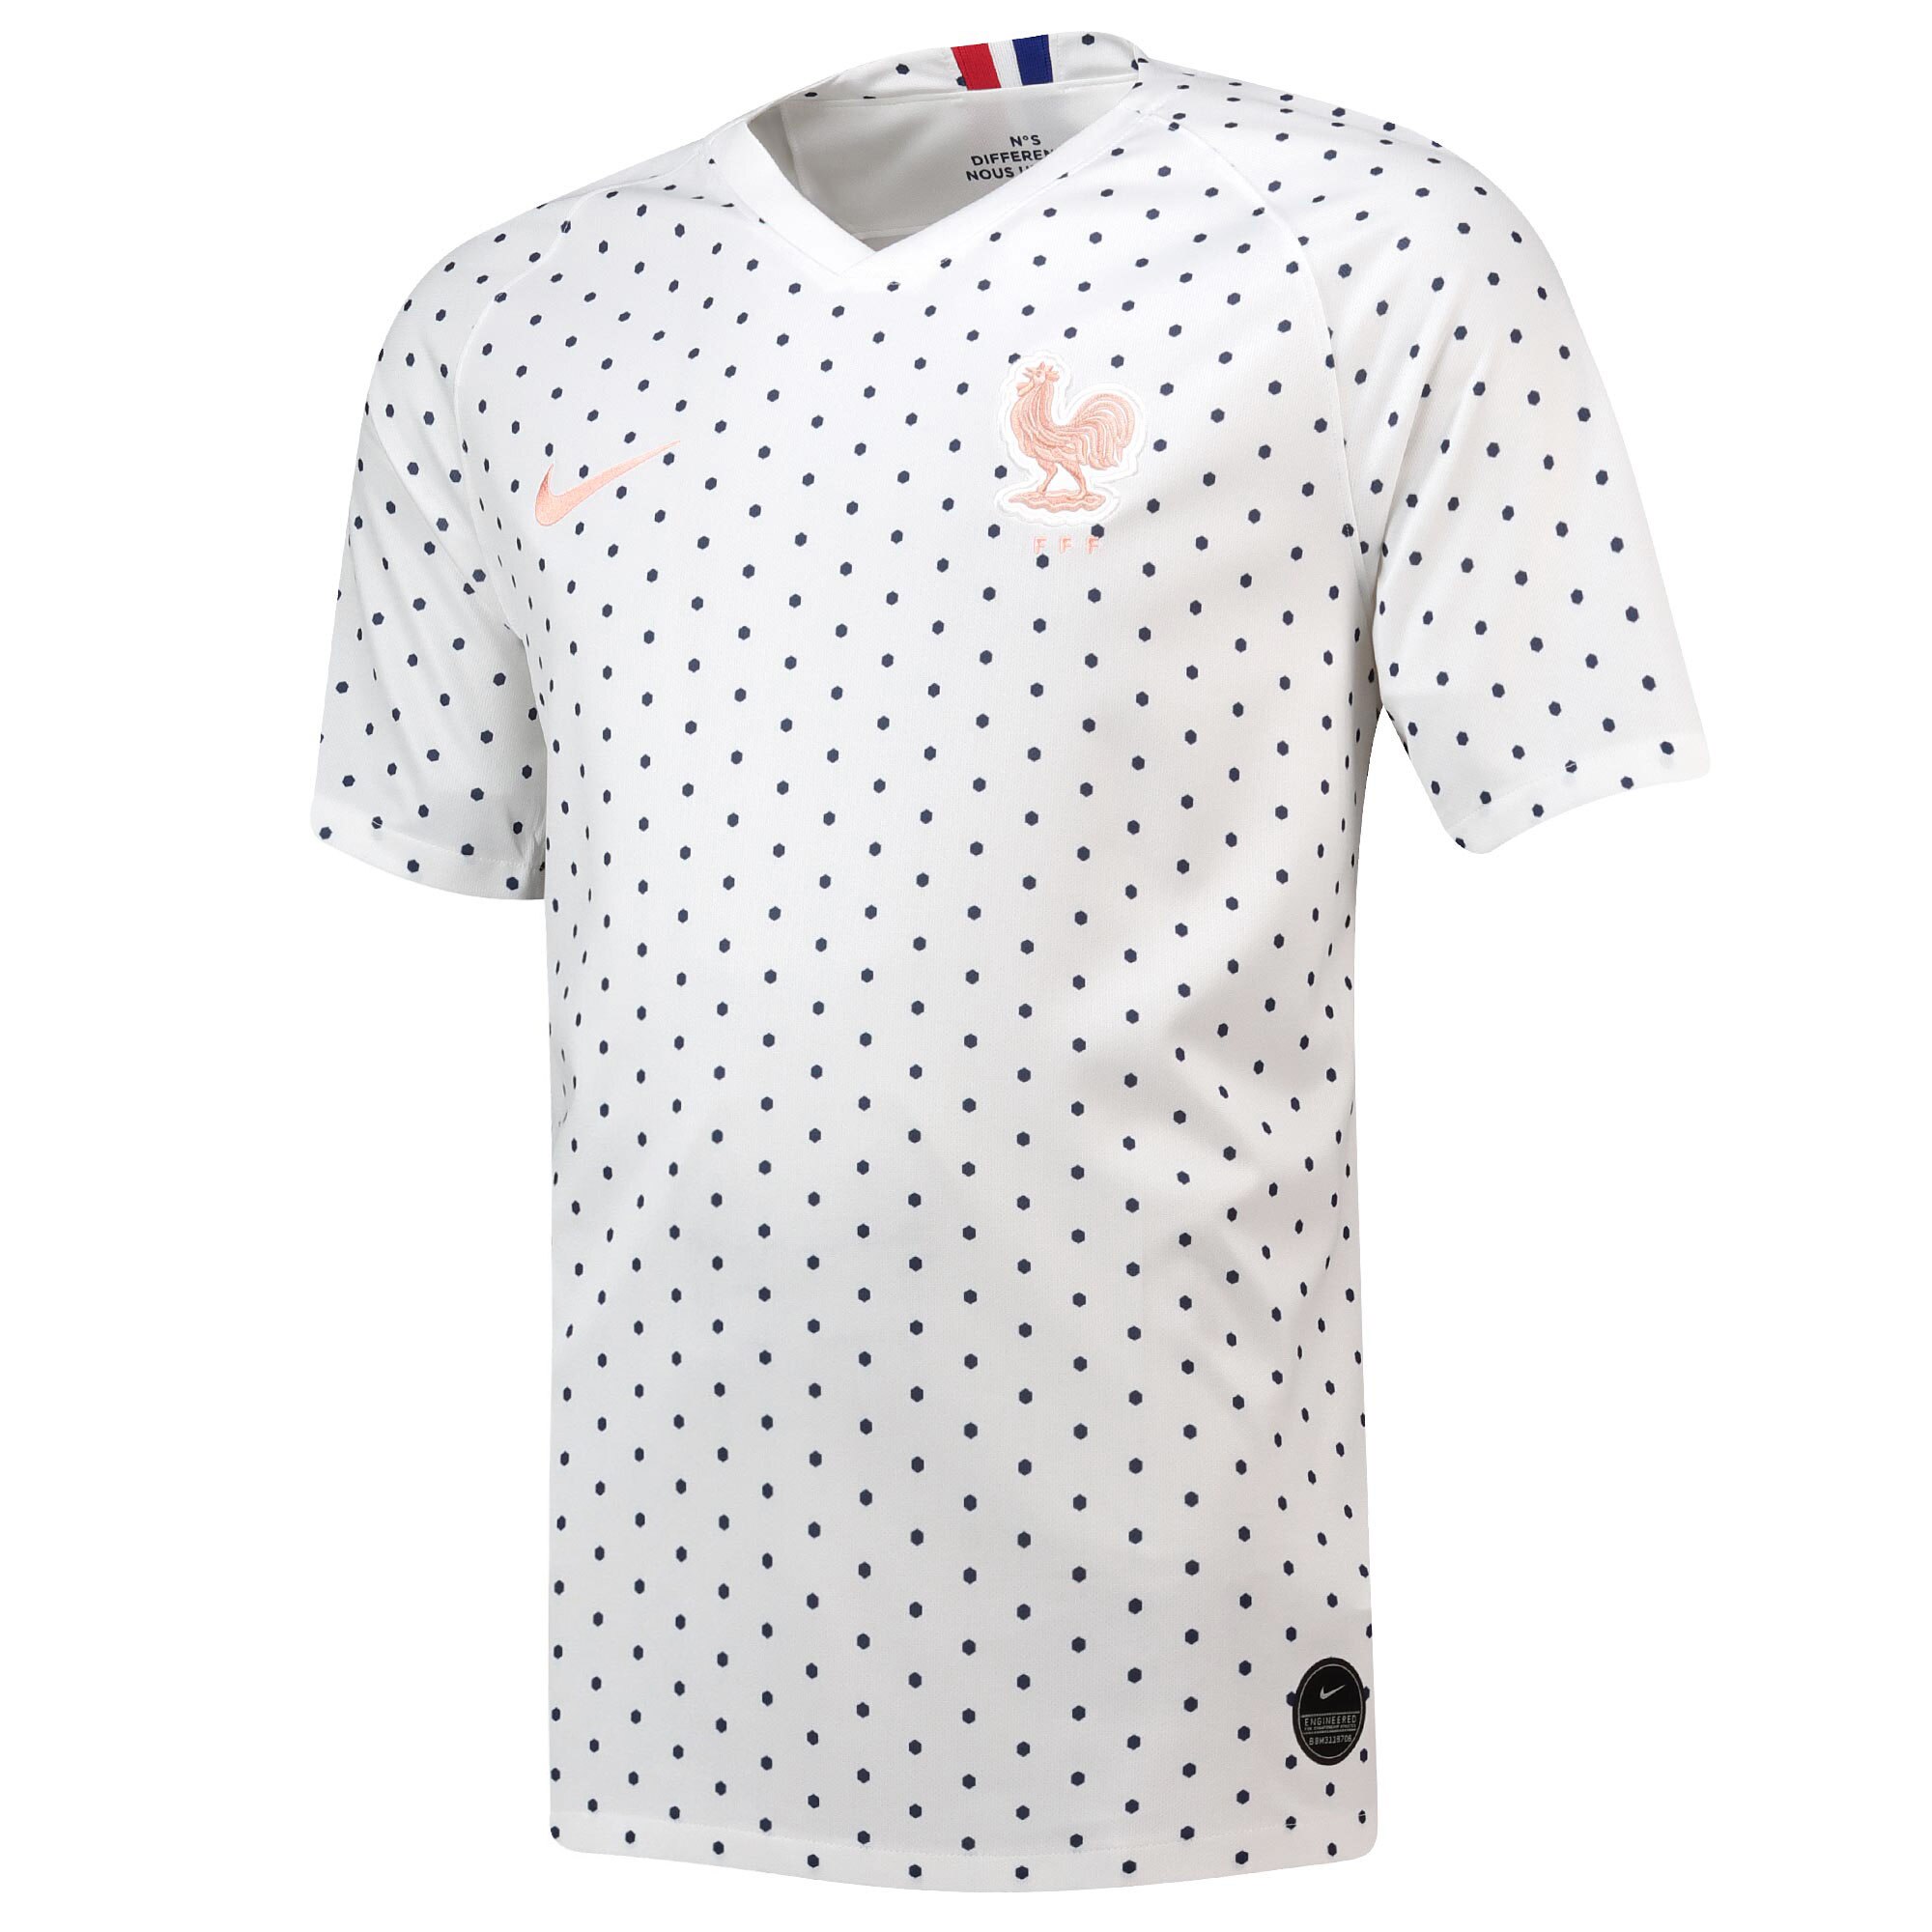 France Away Stadium Shirt 2019-20 - Mens